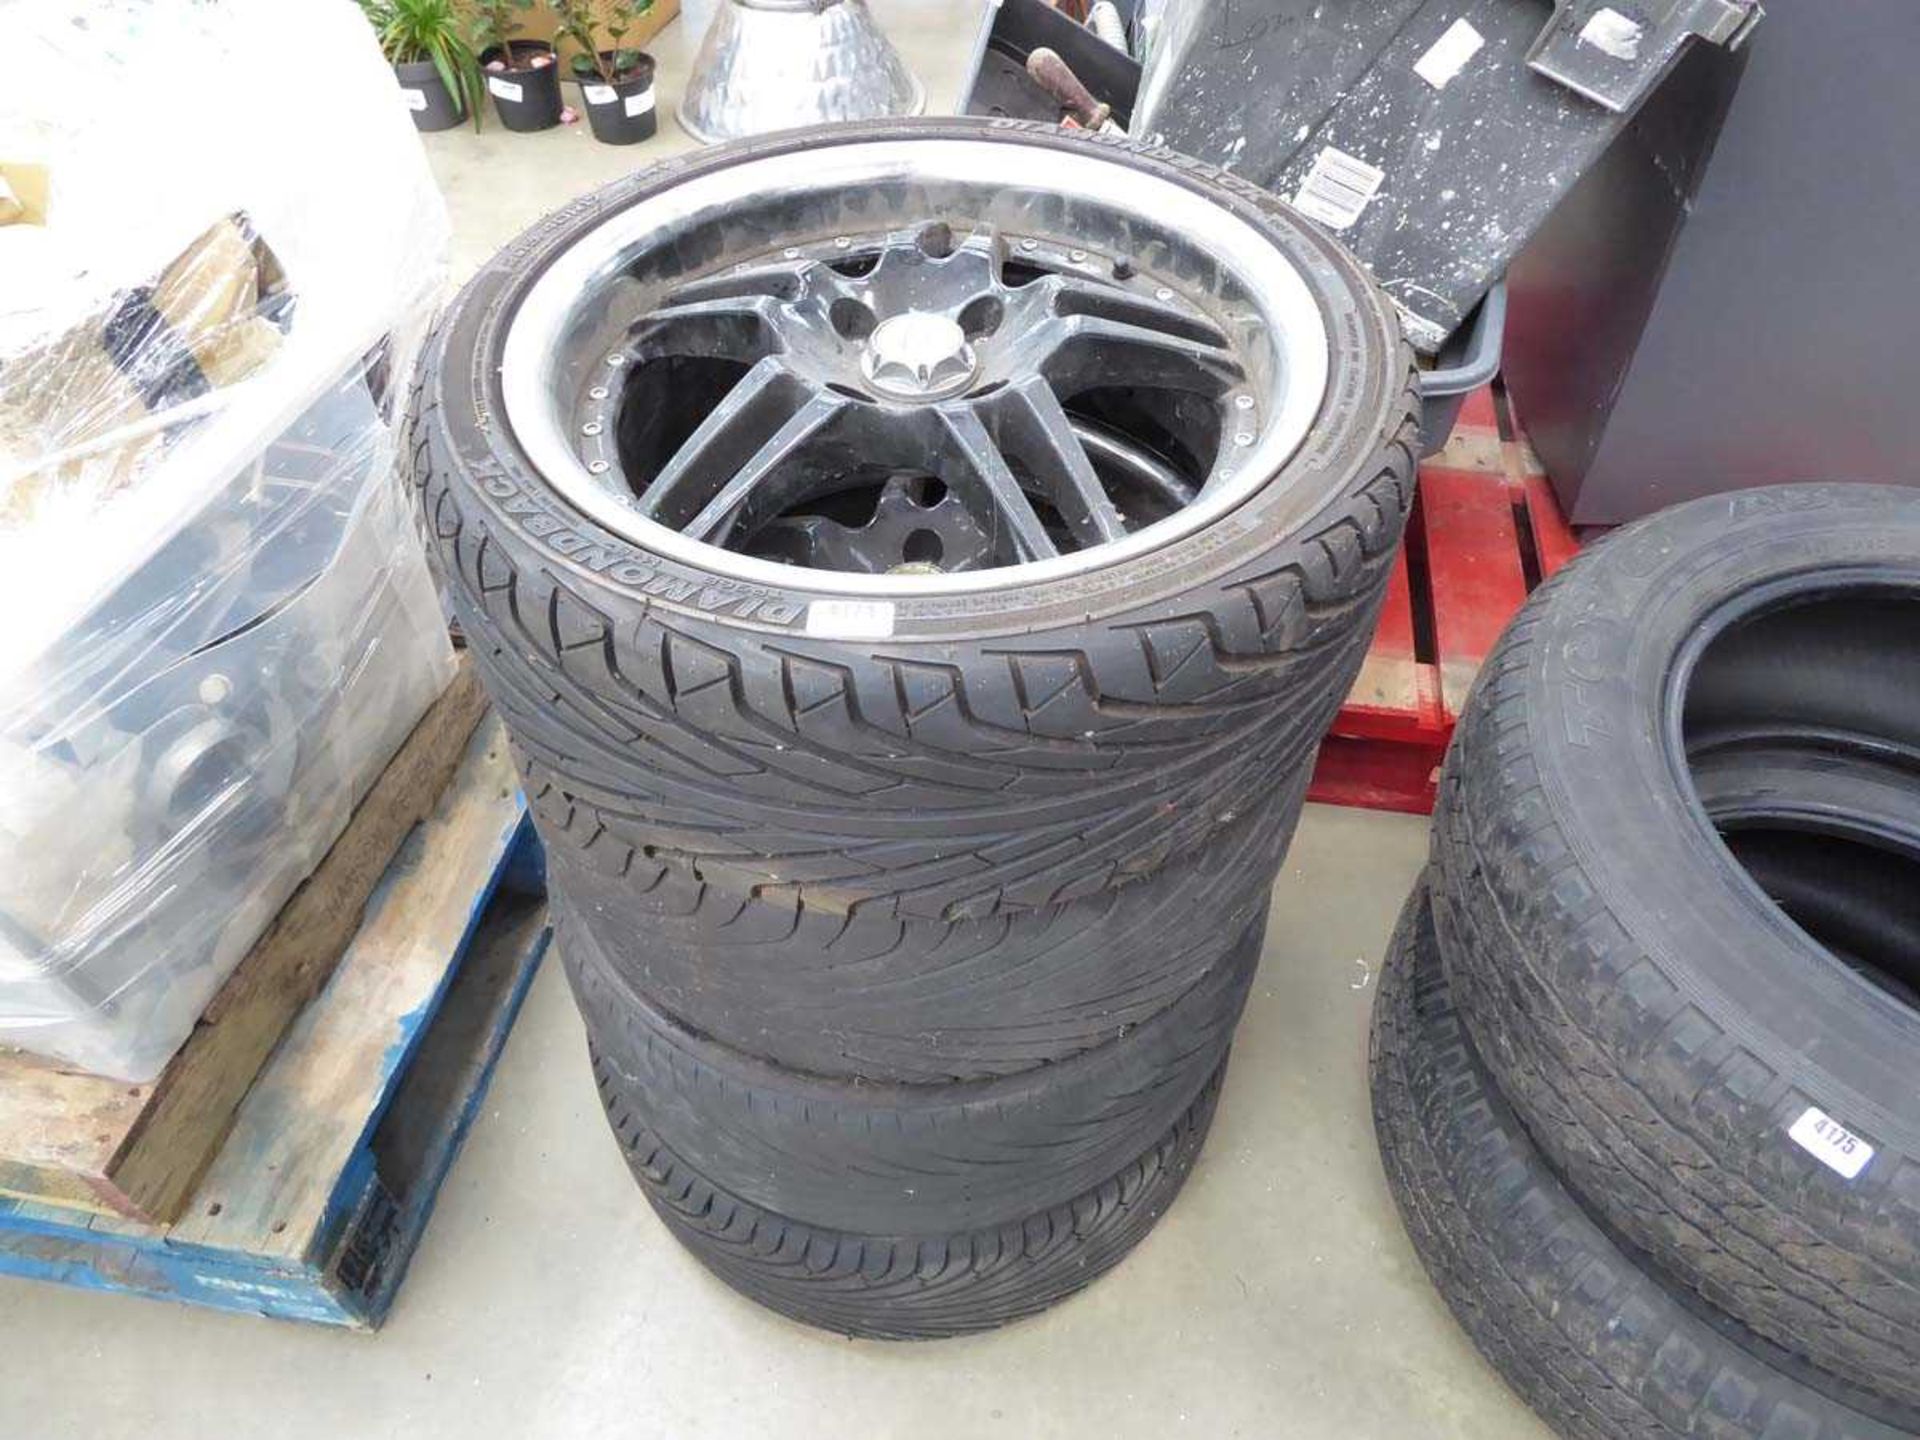 Set of vintage split rim BMW alloy wheels and tyres, 205x40x17 tyres